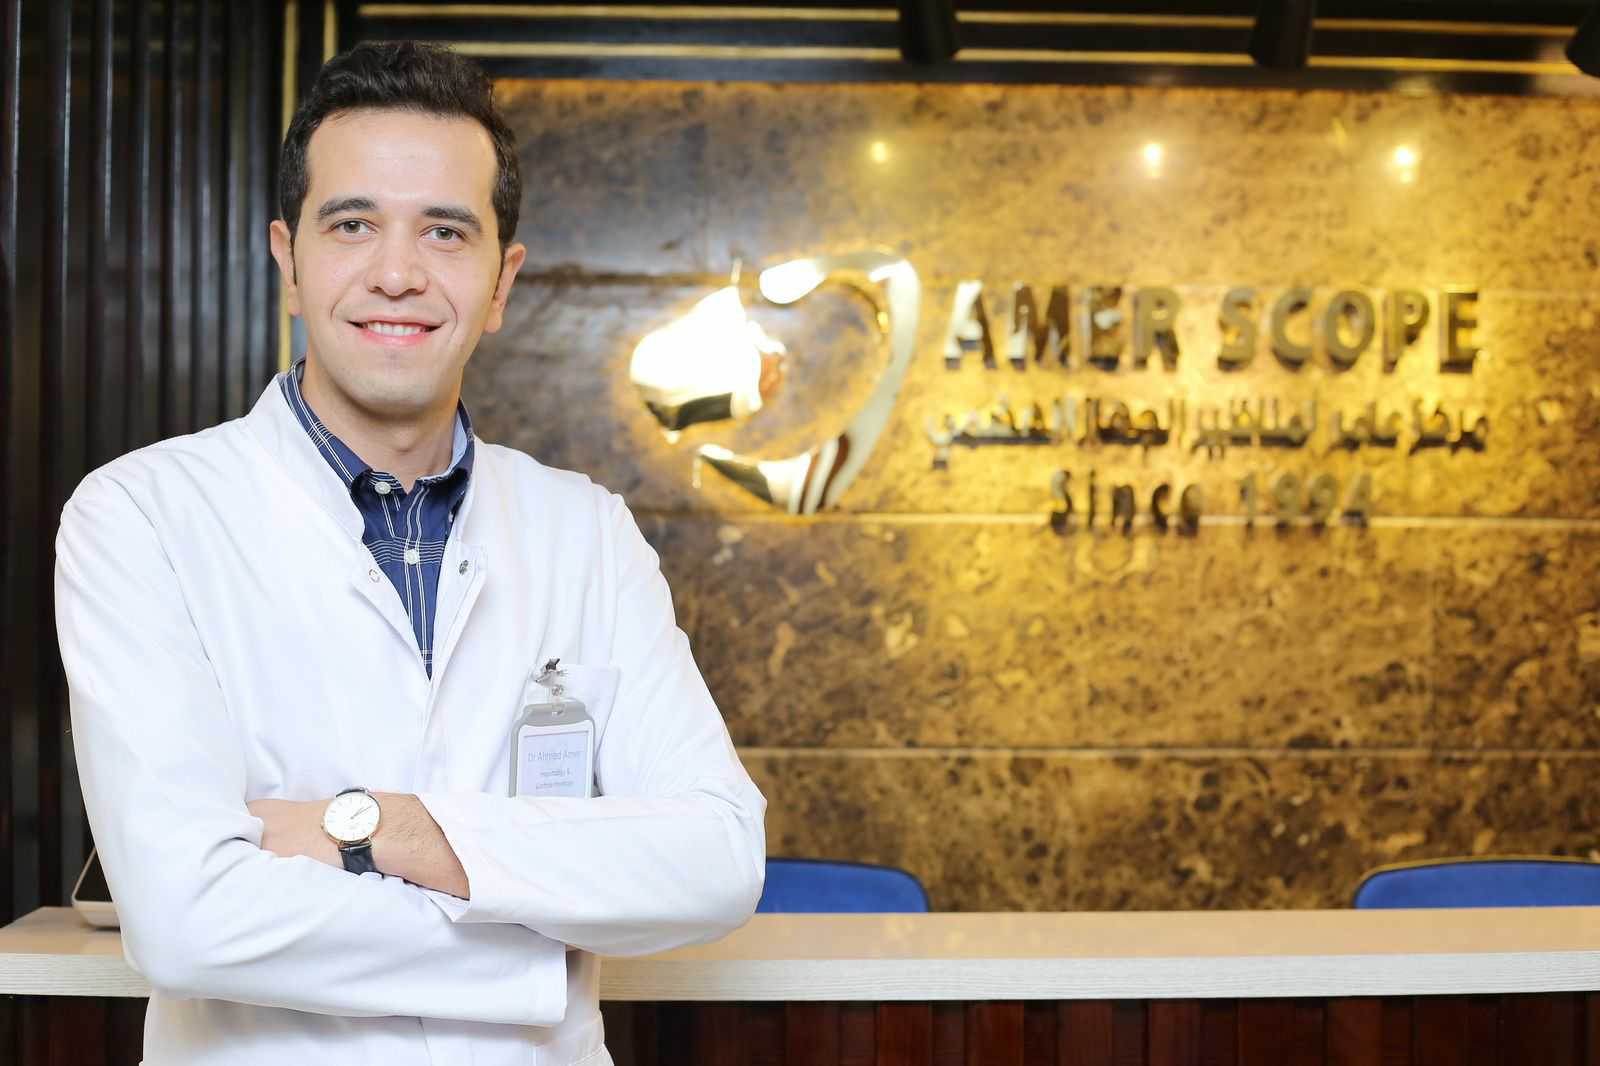 Dr. Ahmed Amer Afifi